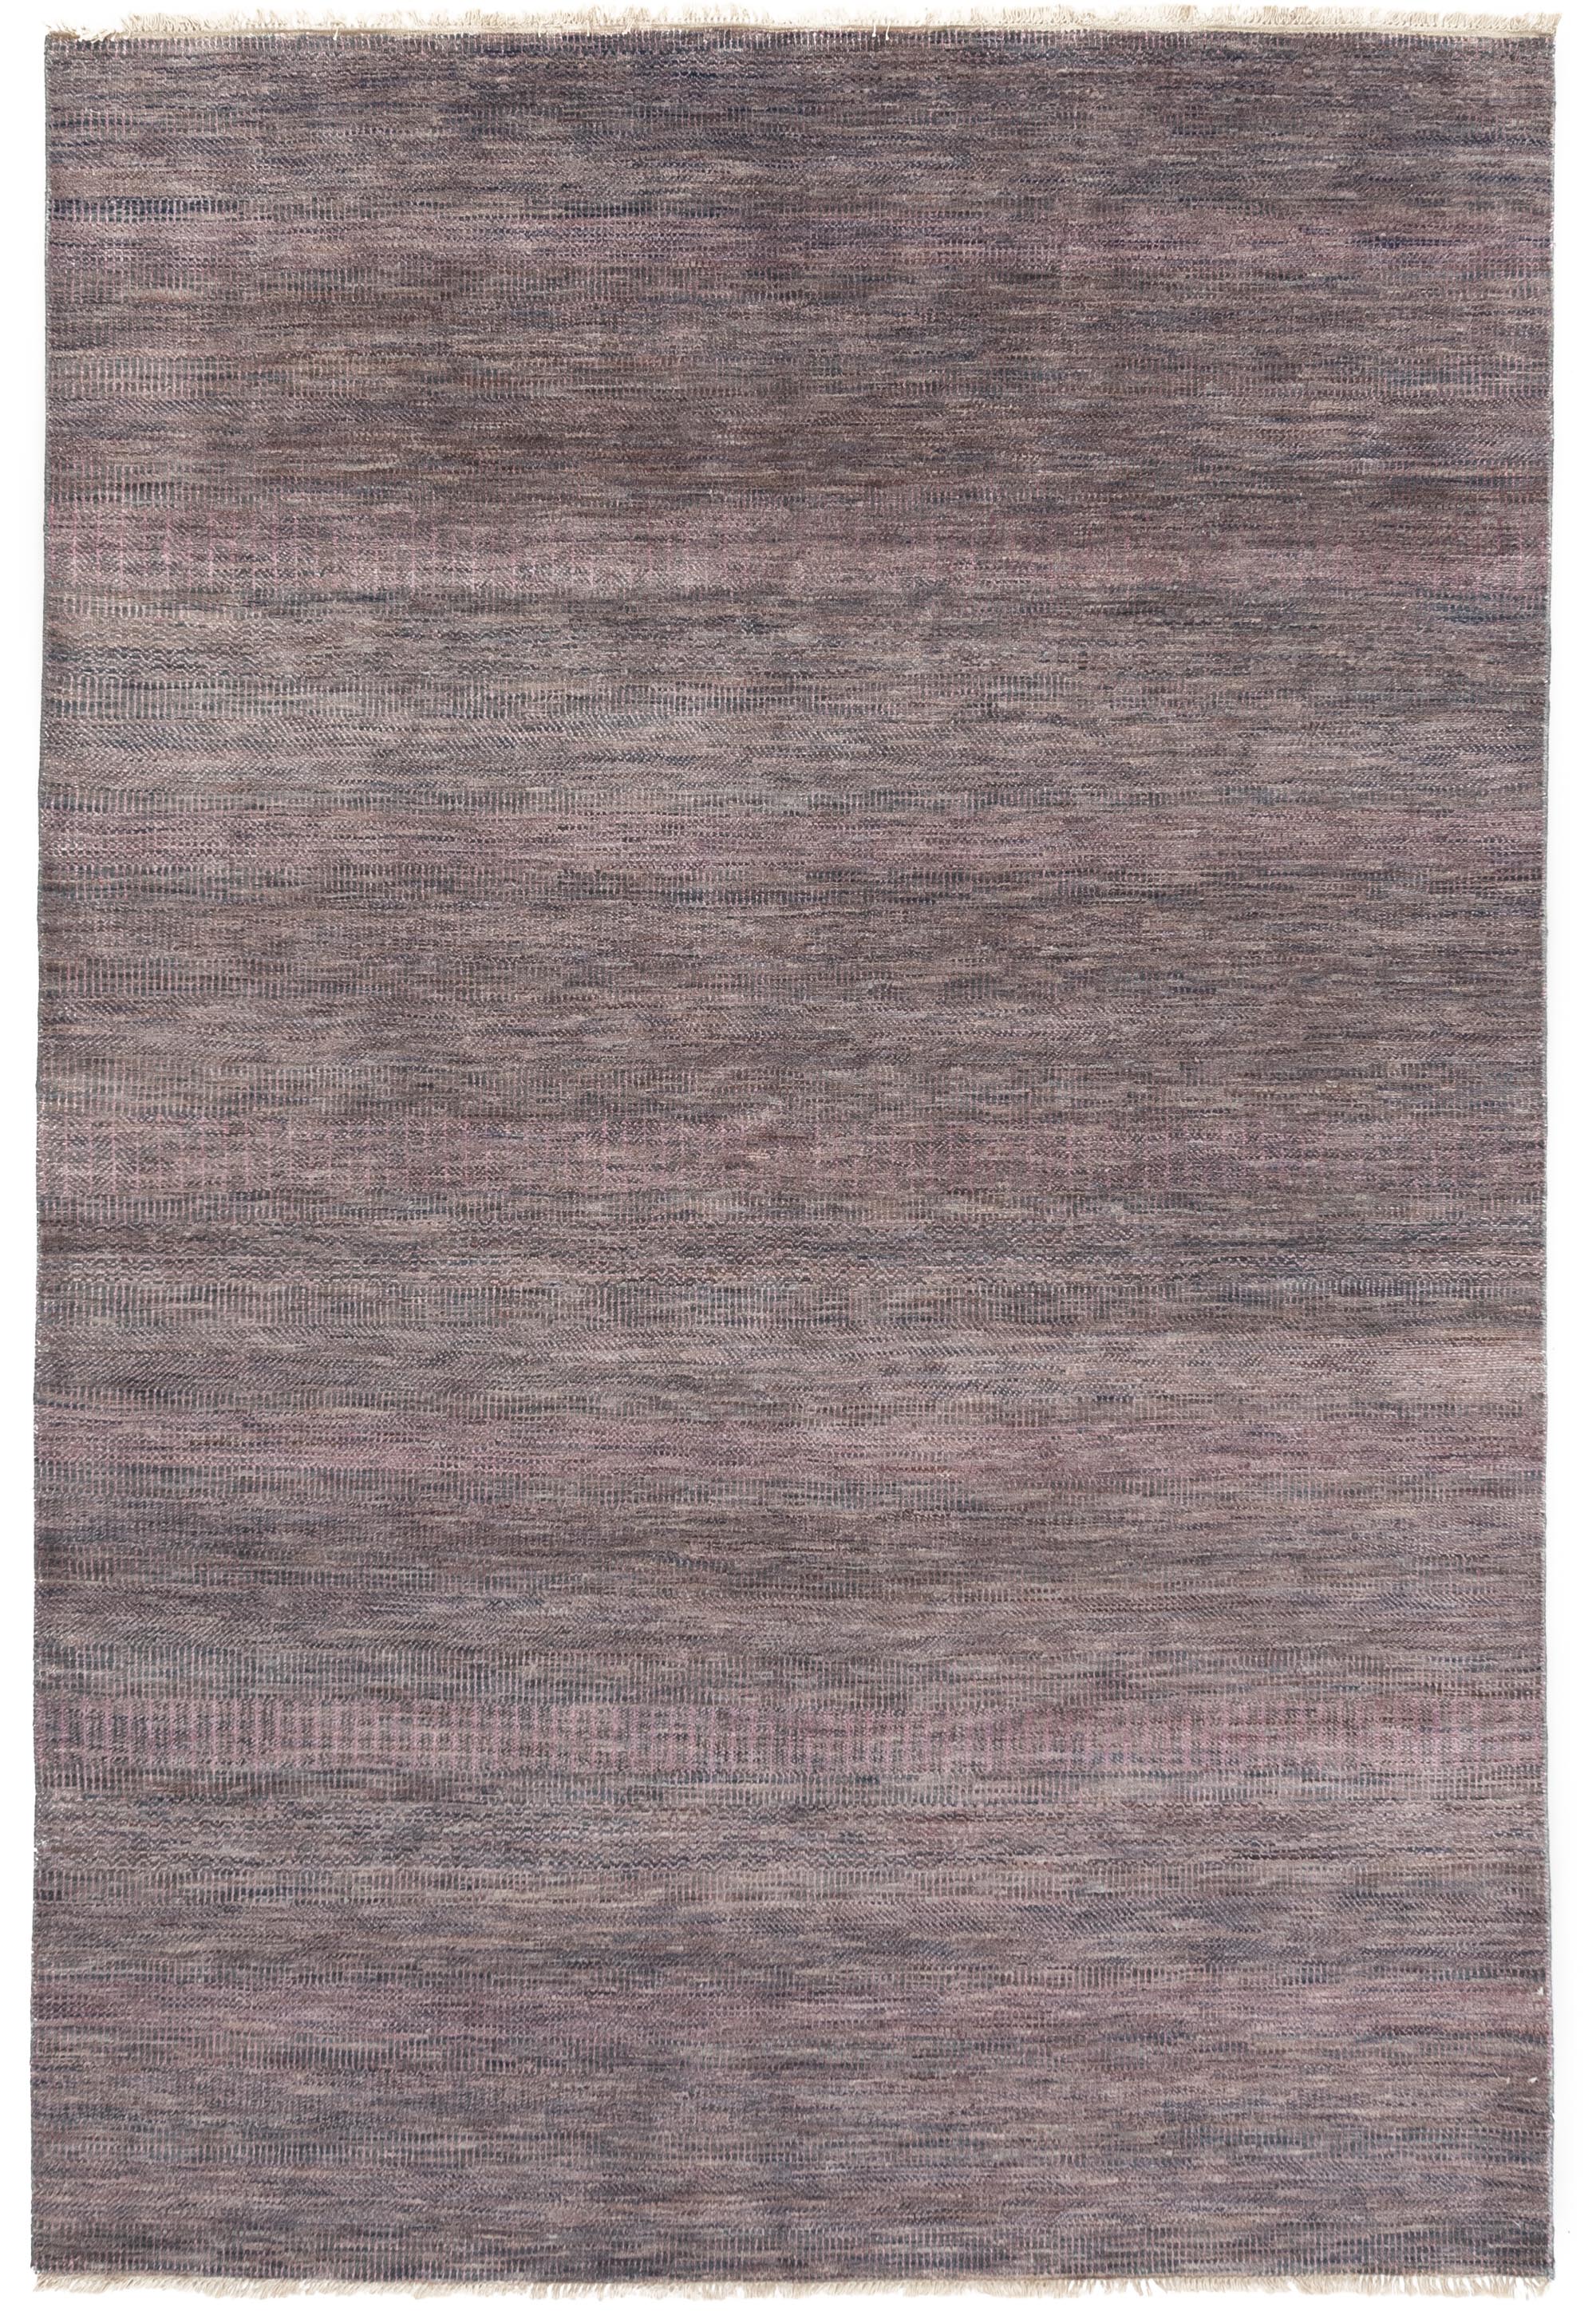 New Indo Savannah Transitional Gray Purple Rug <br> 6'3 x 9'2